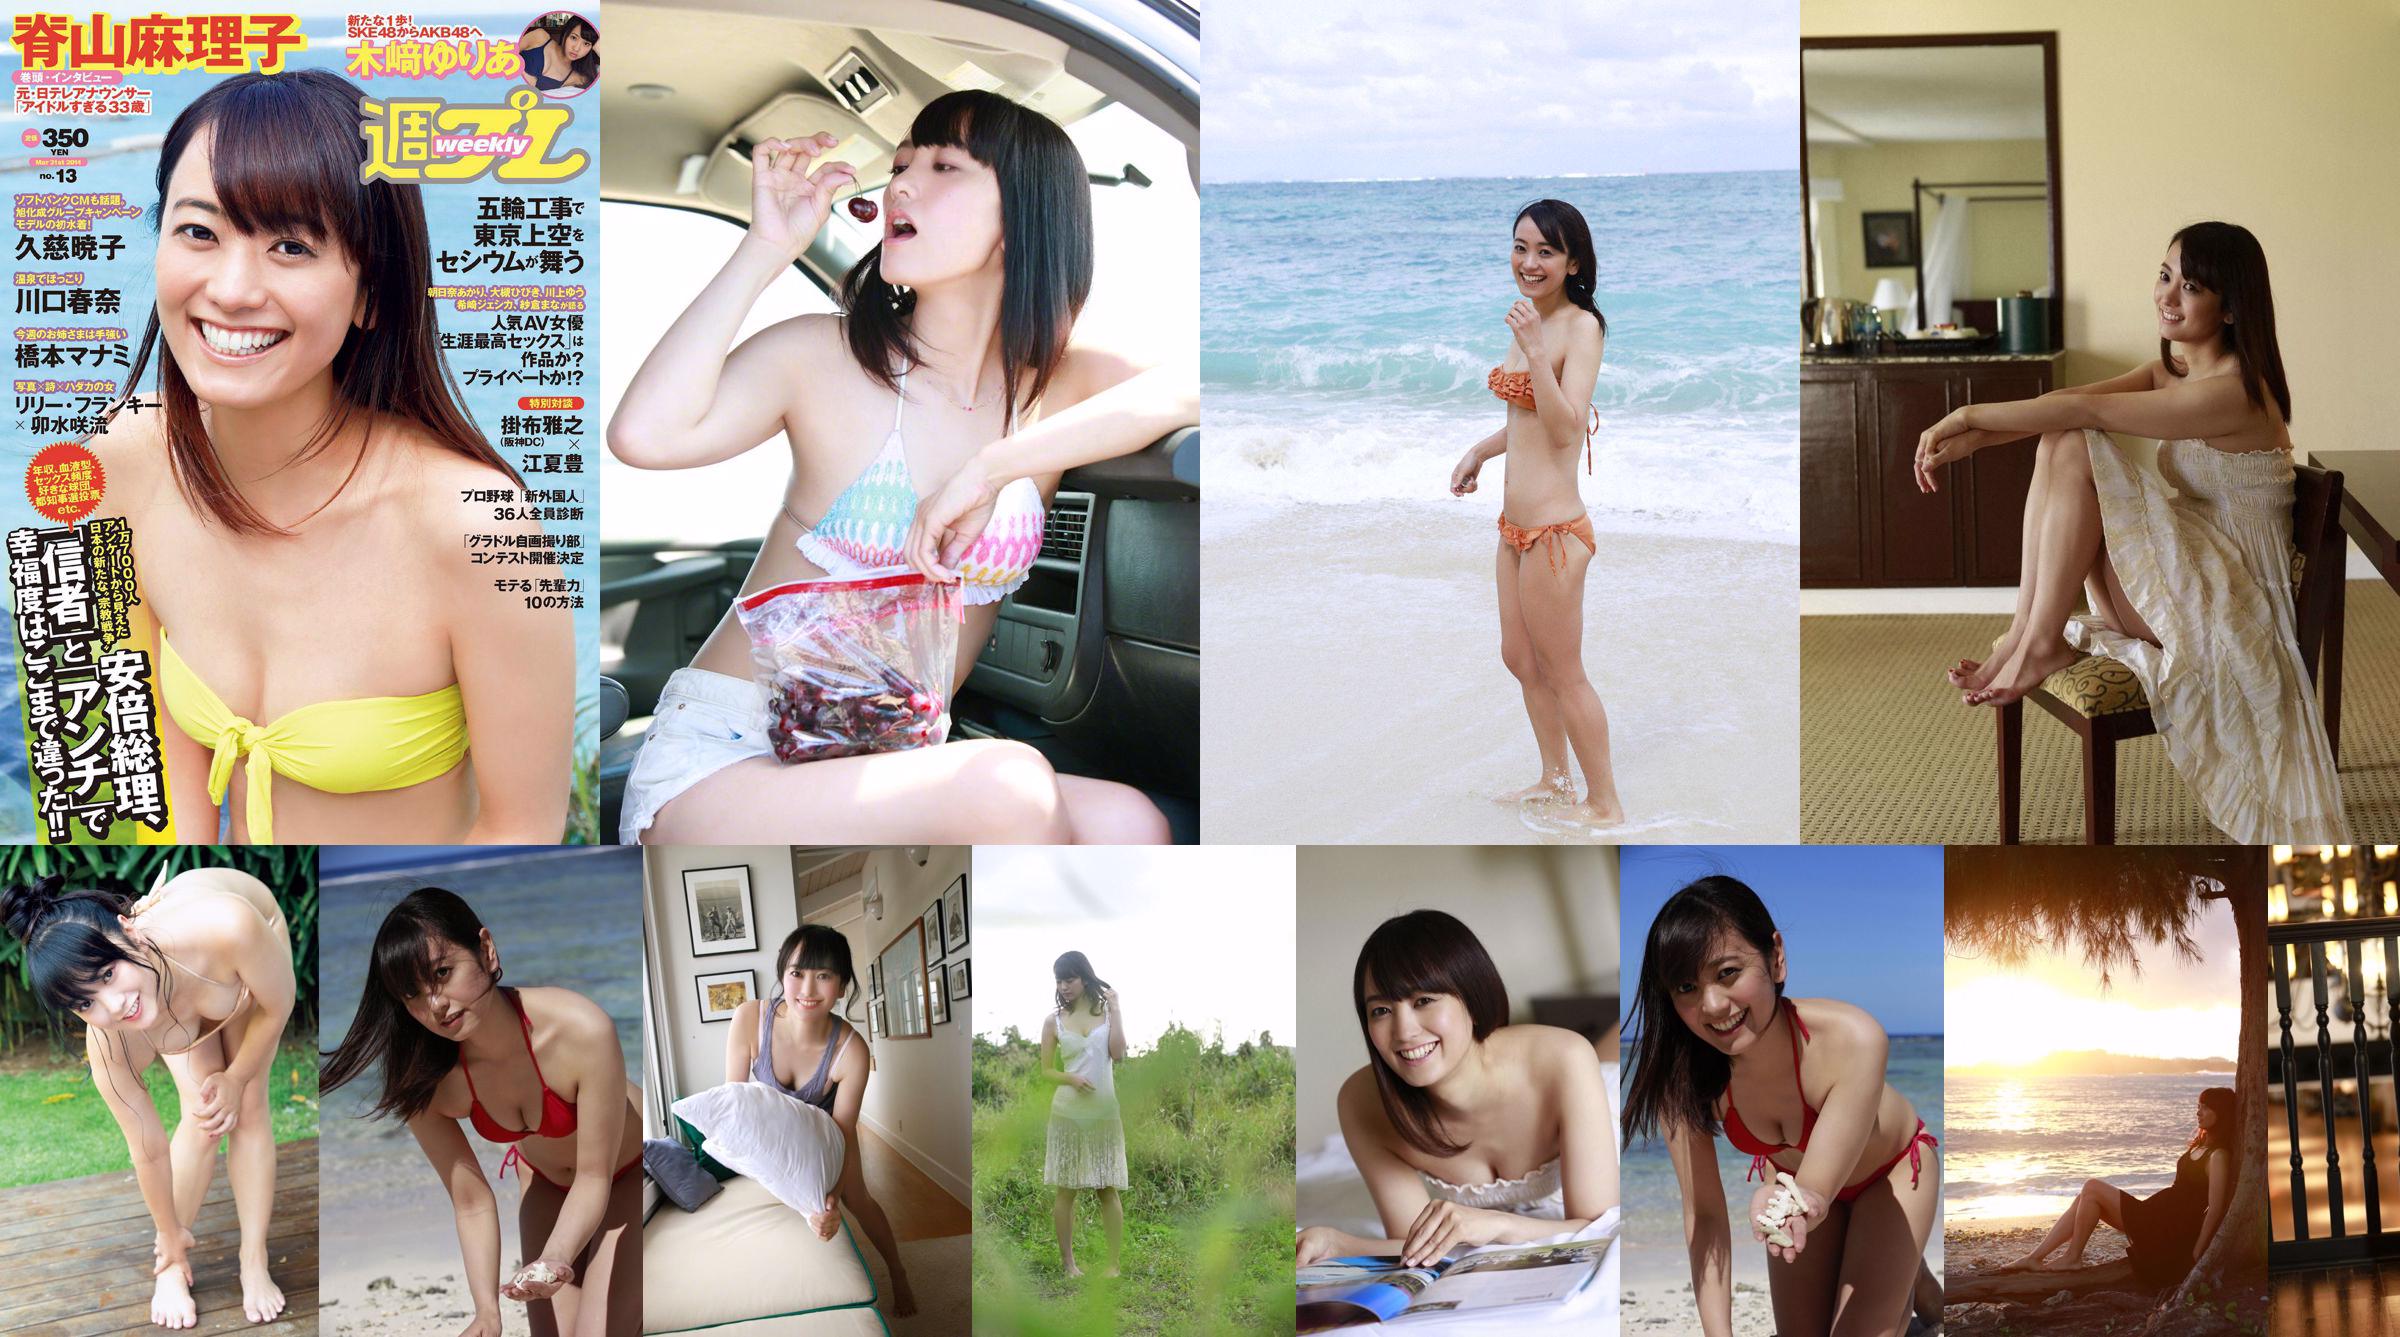 Sariyama Mariko "Aidaru 33 jaar" [WPB-net] No.165 No.4931a8 Pagina 1